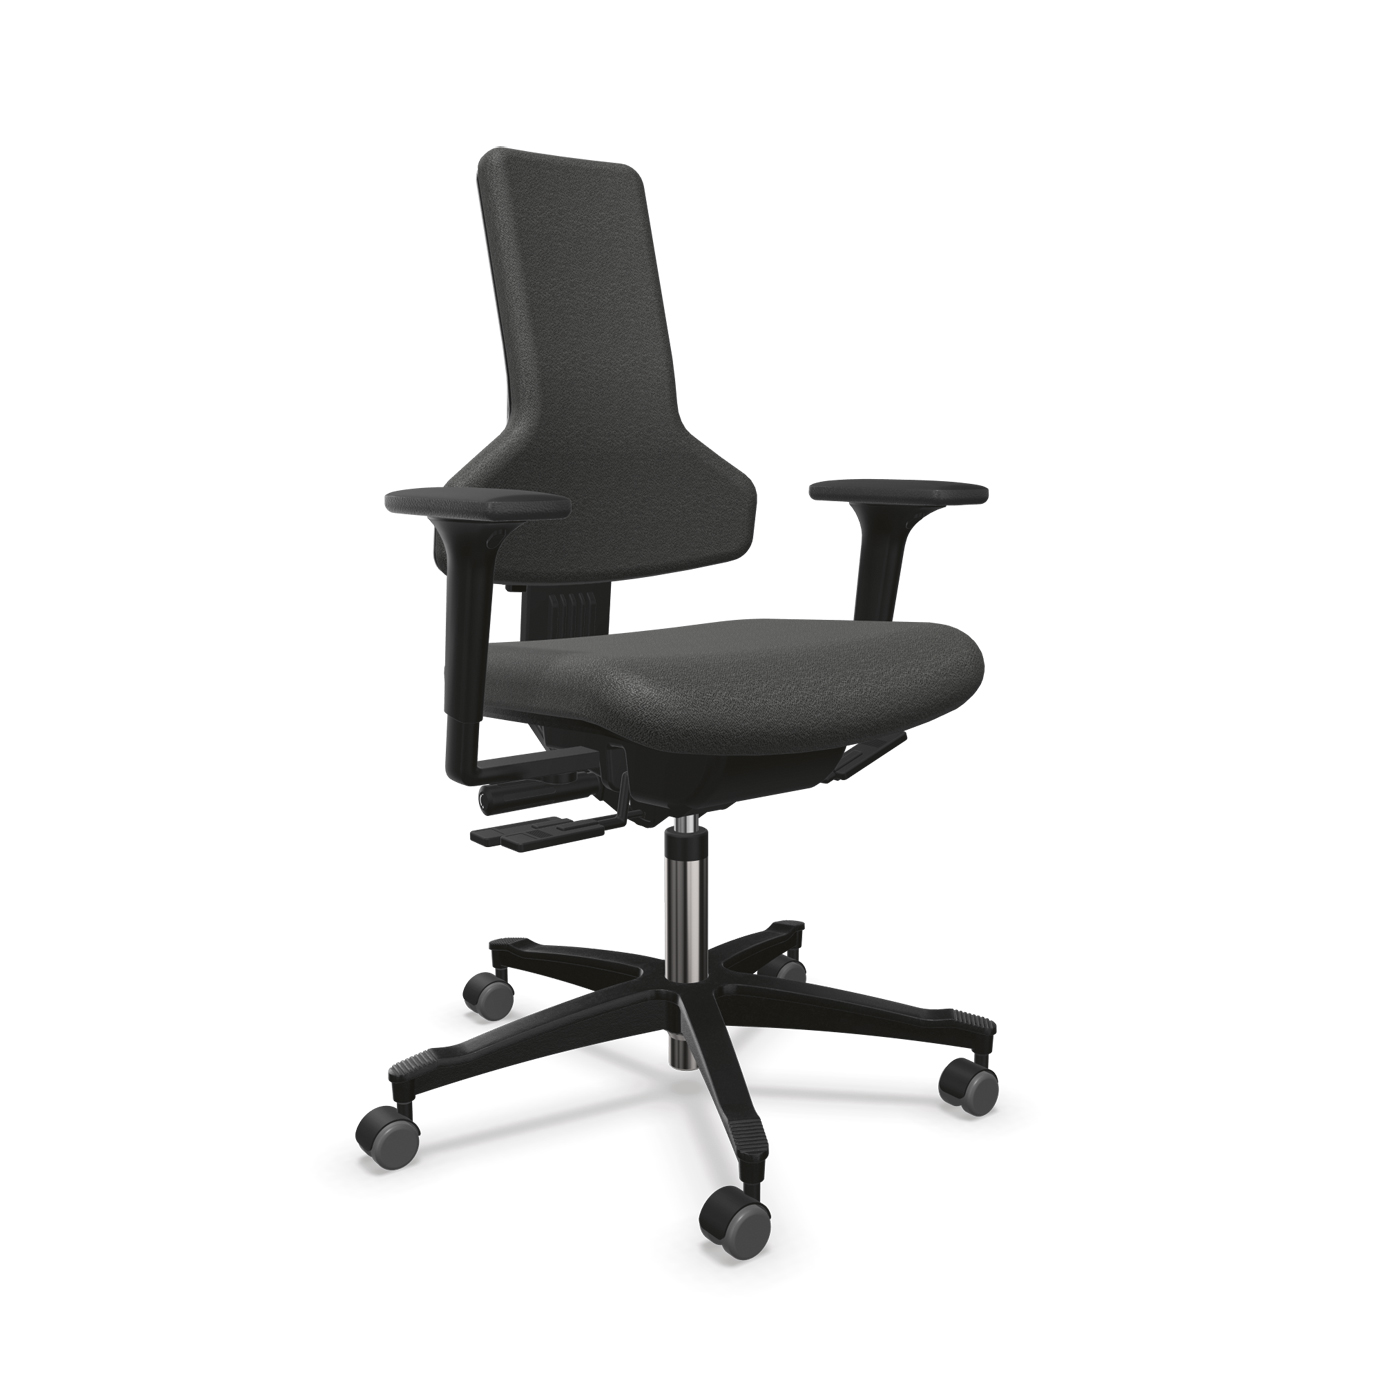 Tec profile Swivel Chair, AB, King Dema - 1 piece